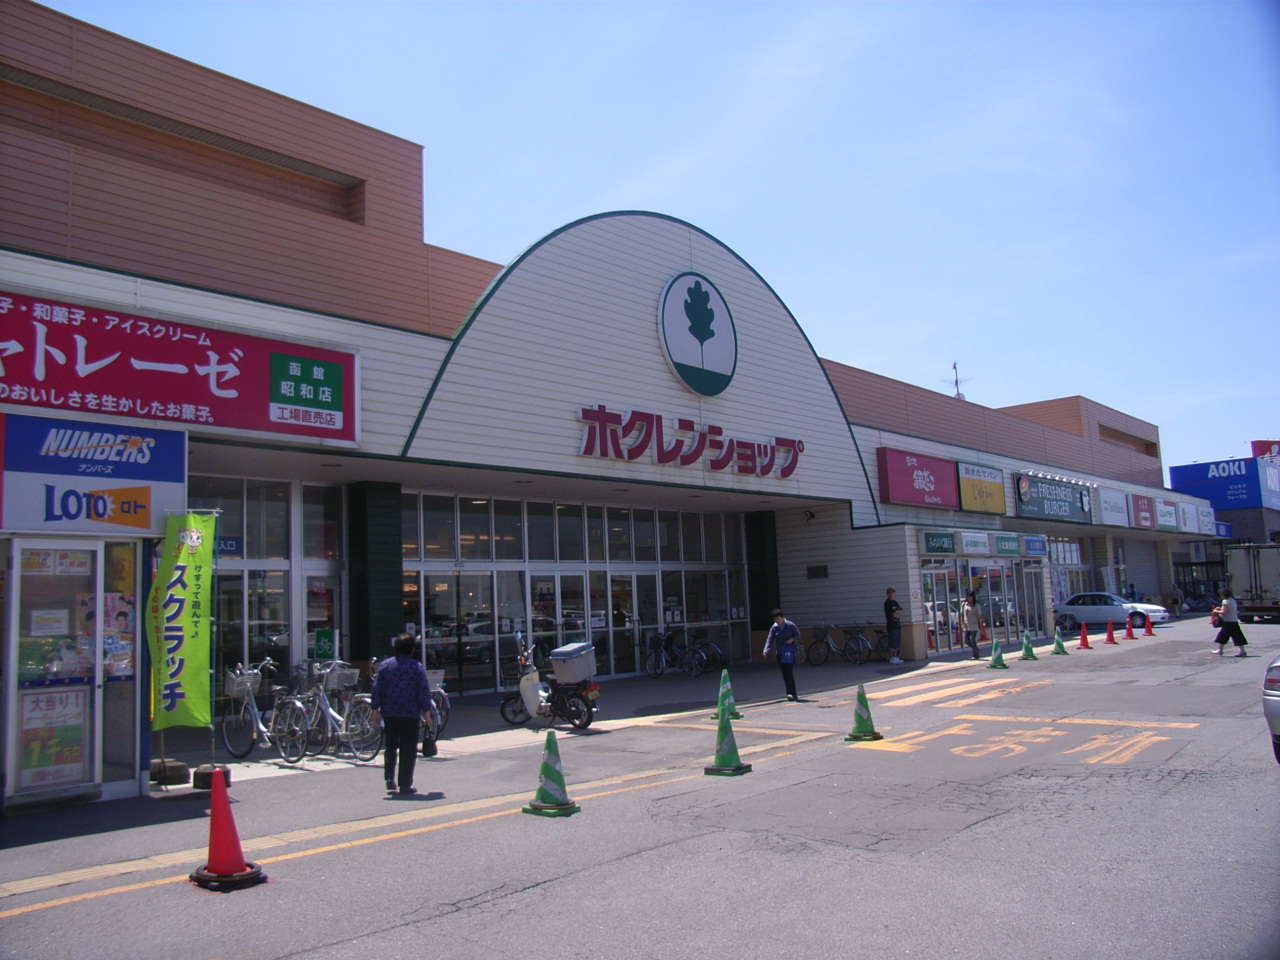 Supermarket. Hokuren shop 616m to Hakodate Showa store (Super)